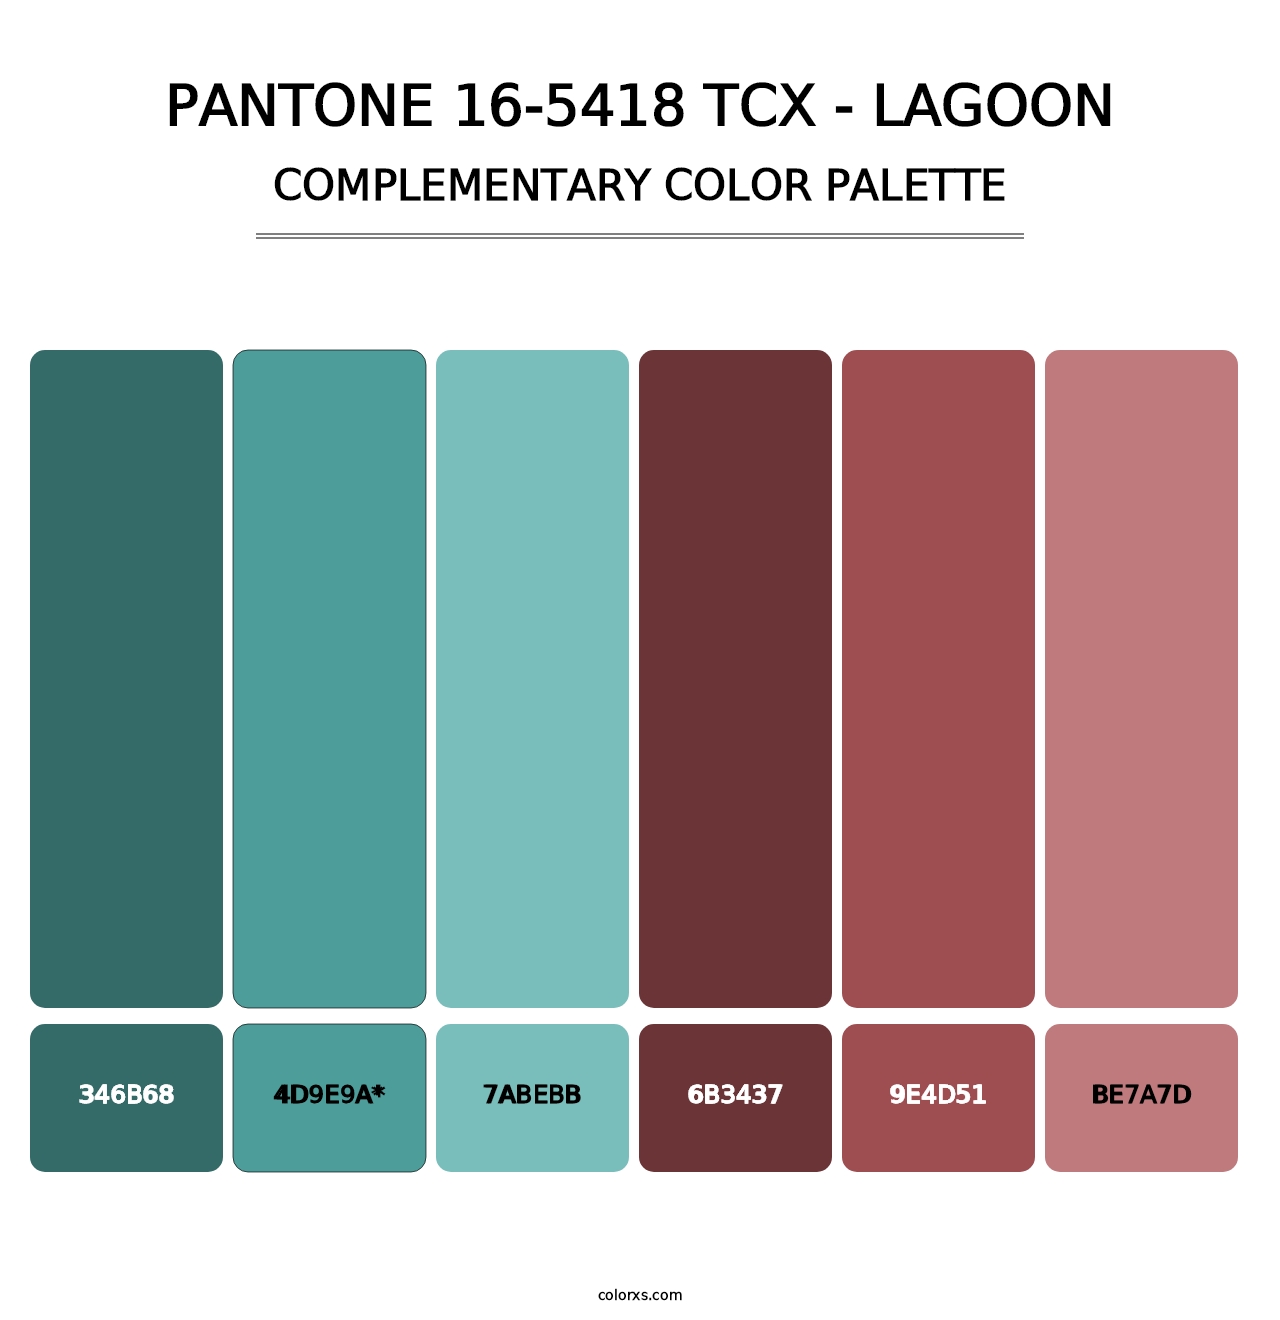 PANTONE 16-5418 TCX - Lagoon - Complementary Color Palette